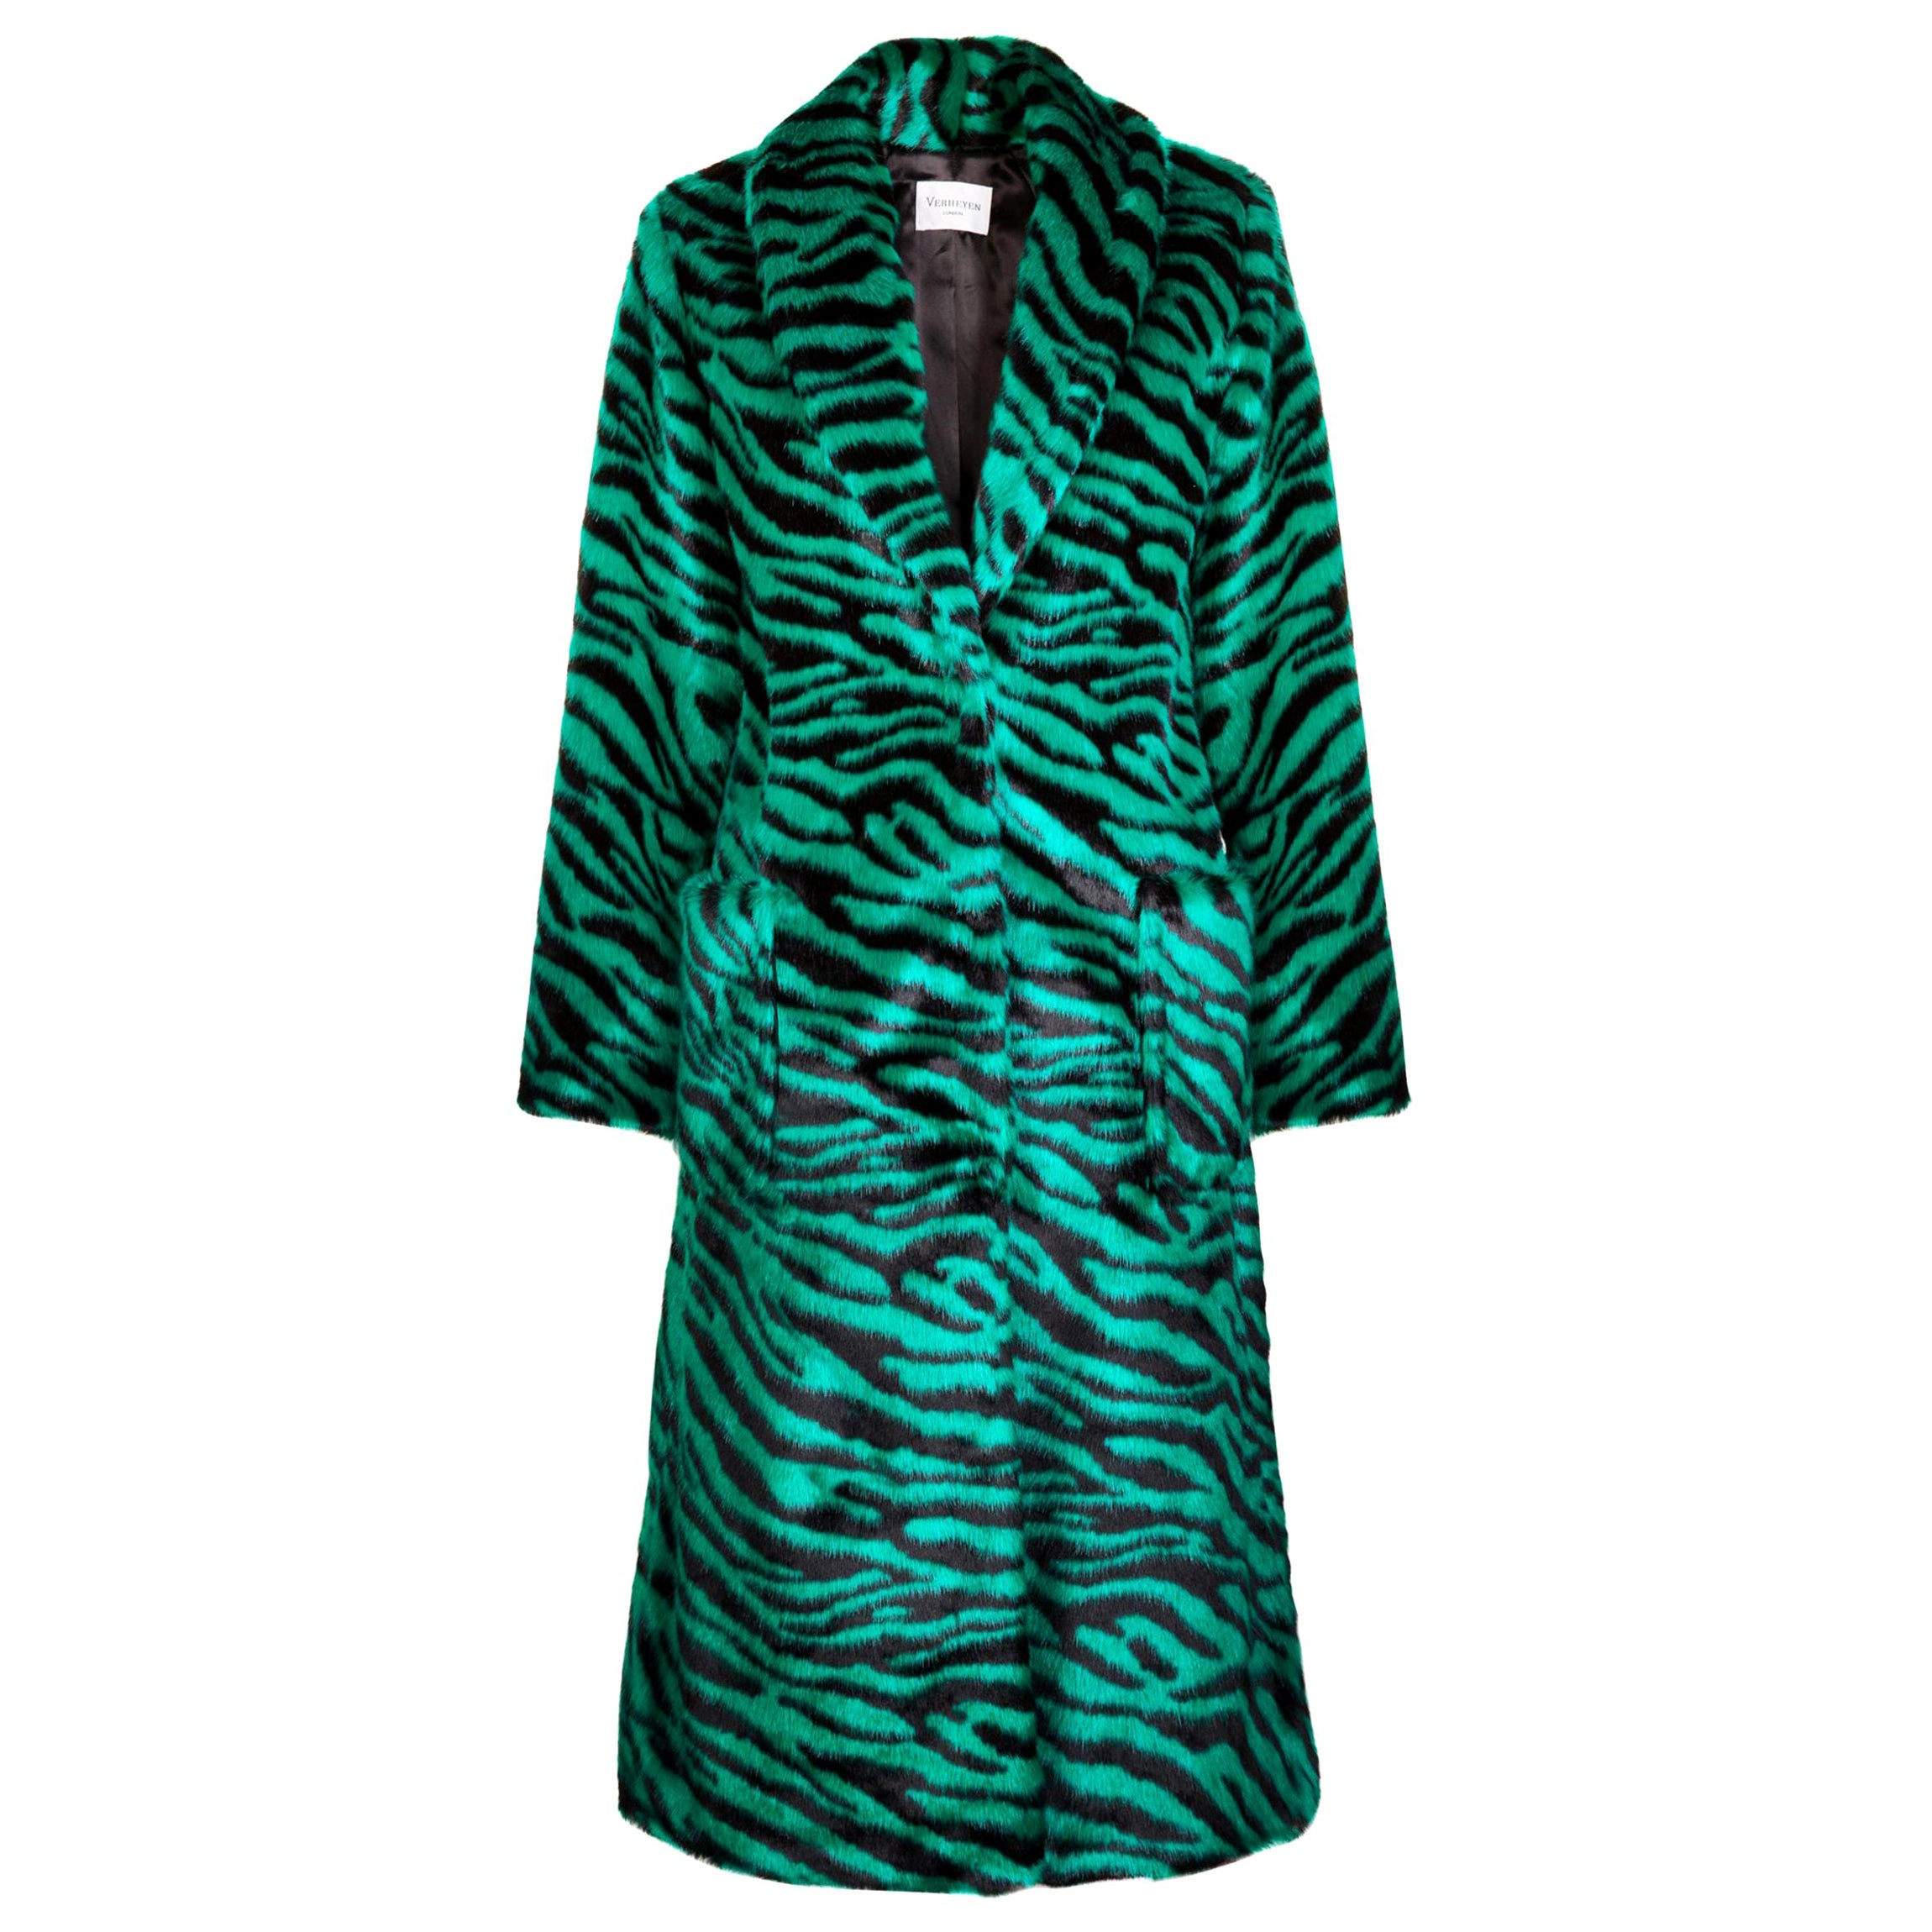 Verheyen London Manteau en fausse fourrure vert émeraude à imprimé zébré Esmeralda, taille UK 12